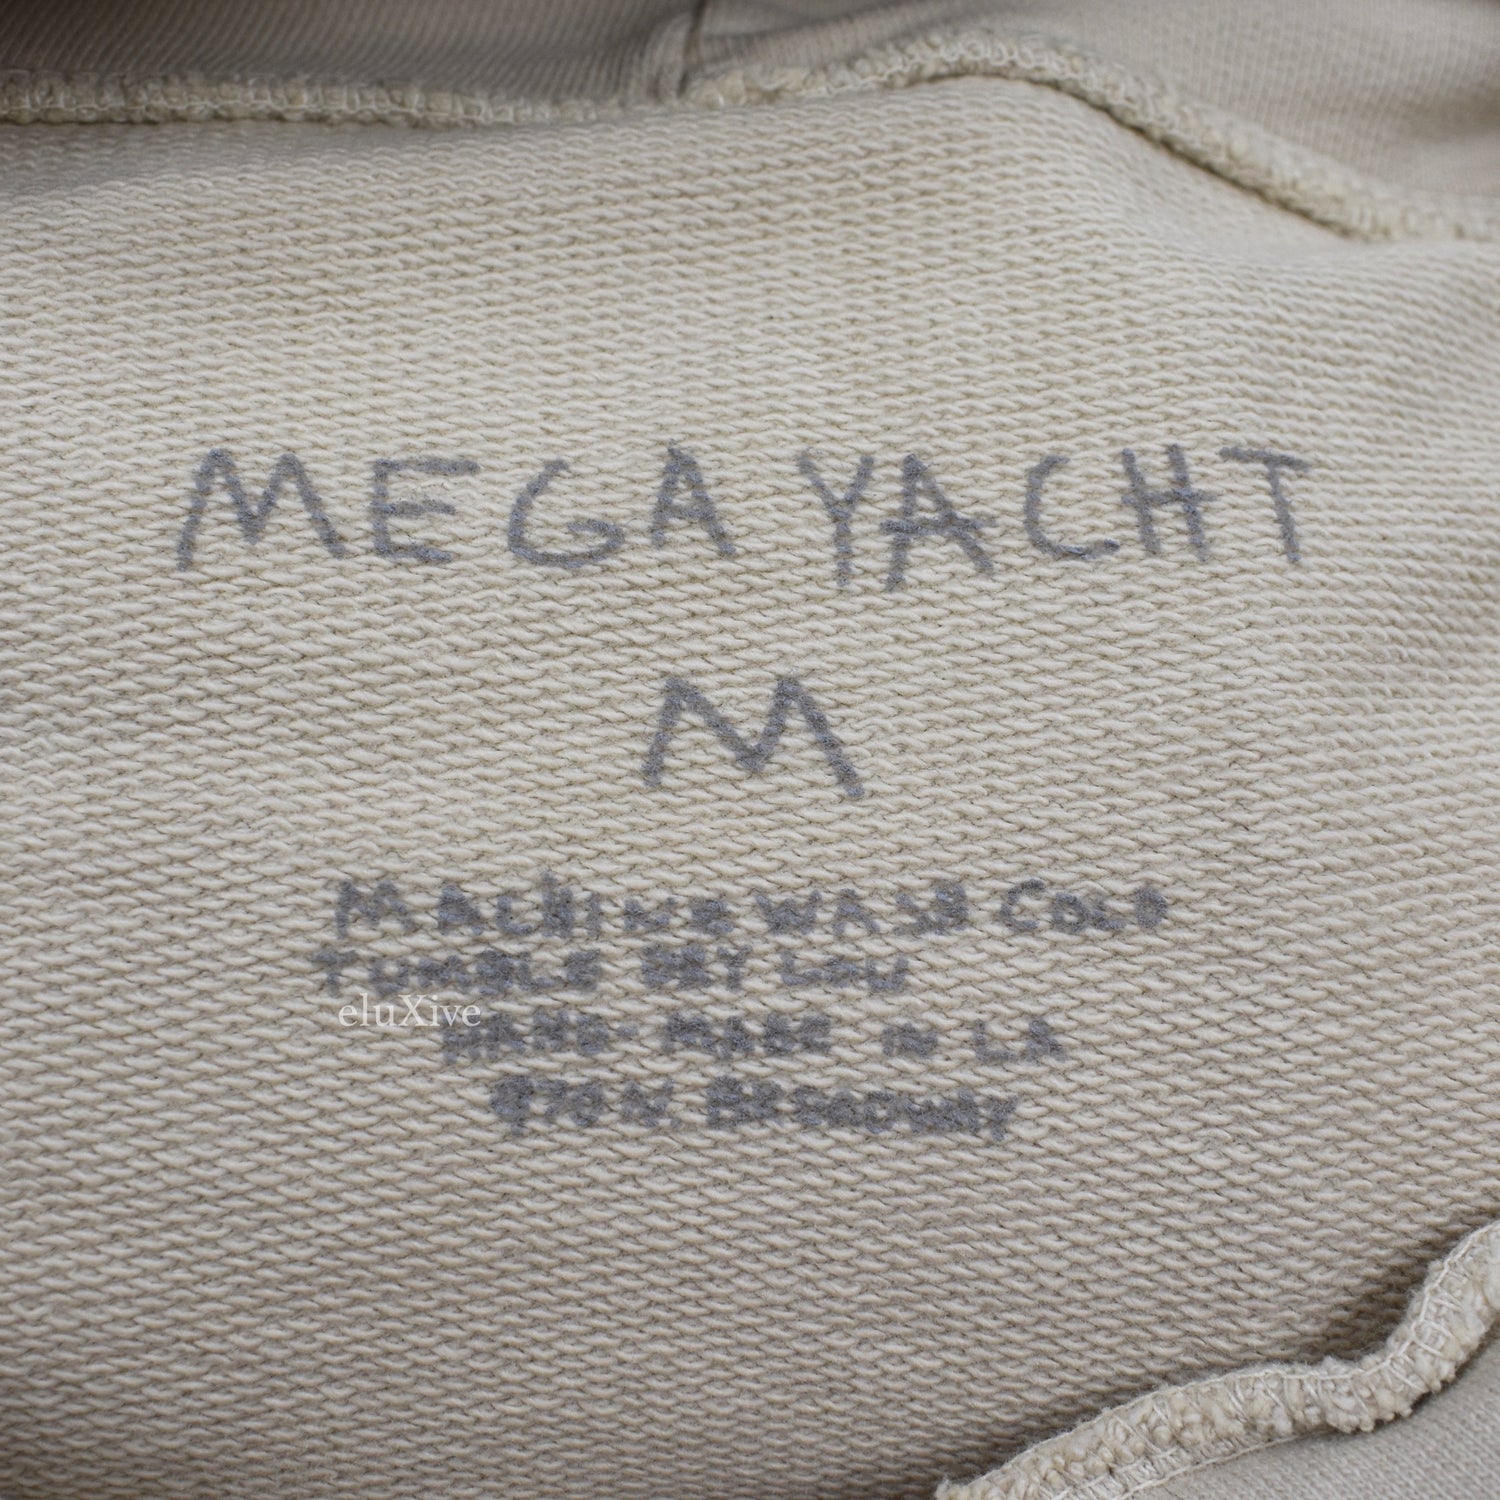 Mega Yacht, Tops, Nwt Rare Mega Yacht Hello Kitty Chanel Hoodie In Medium